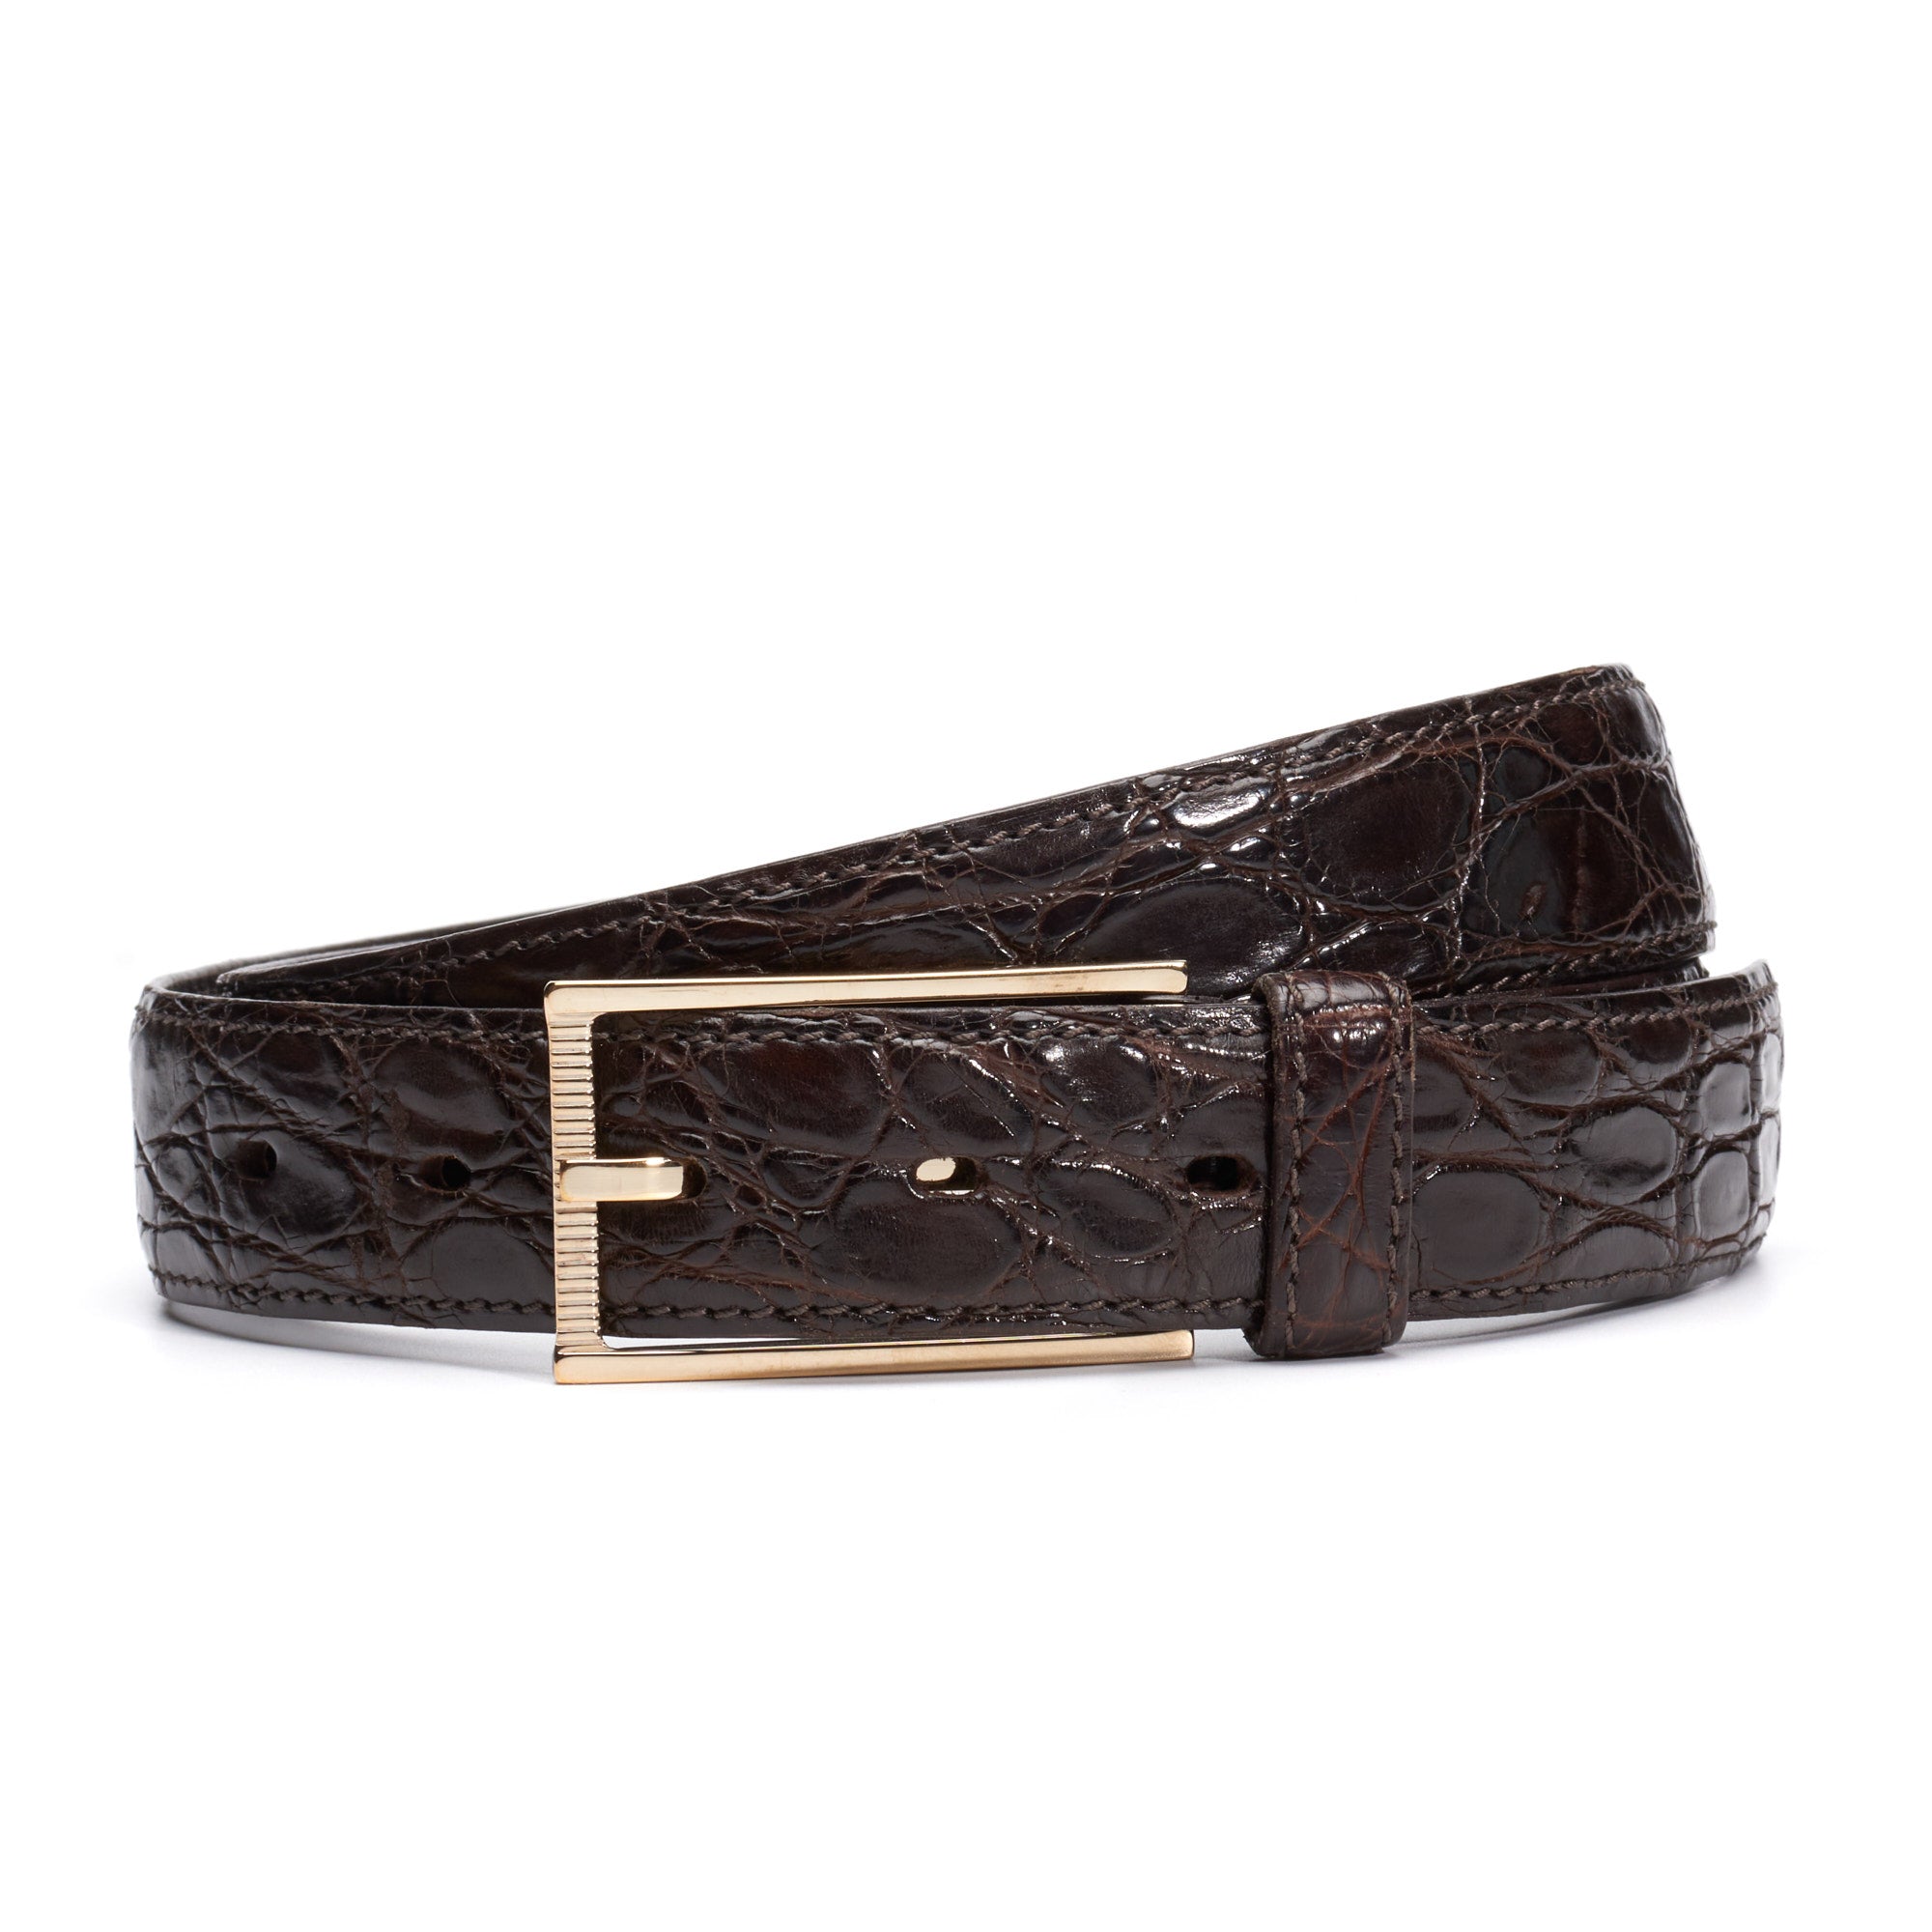 TOM FORD Dark Brown Croco Crocodile Belt with Gold-Tone Buckle NEW 36" 90cm